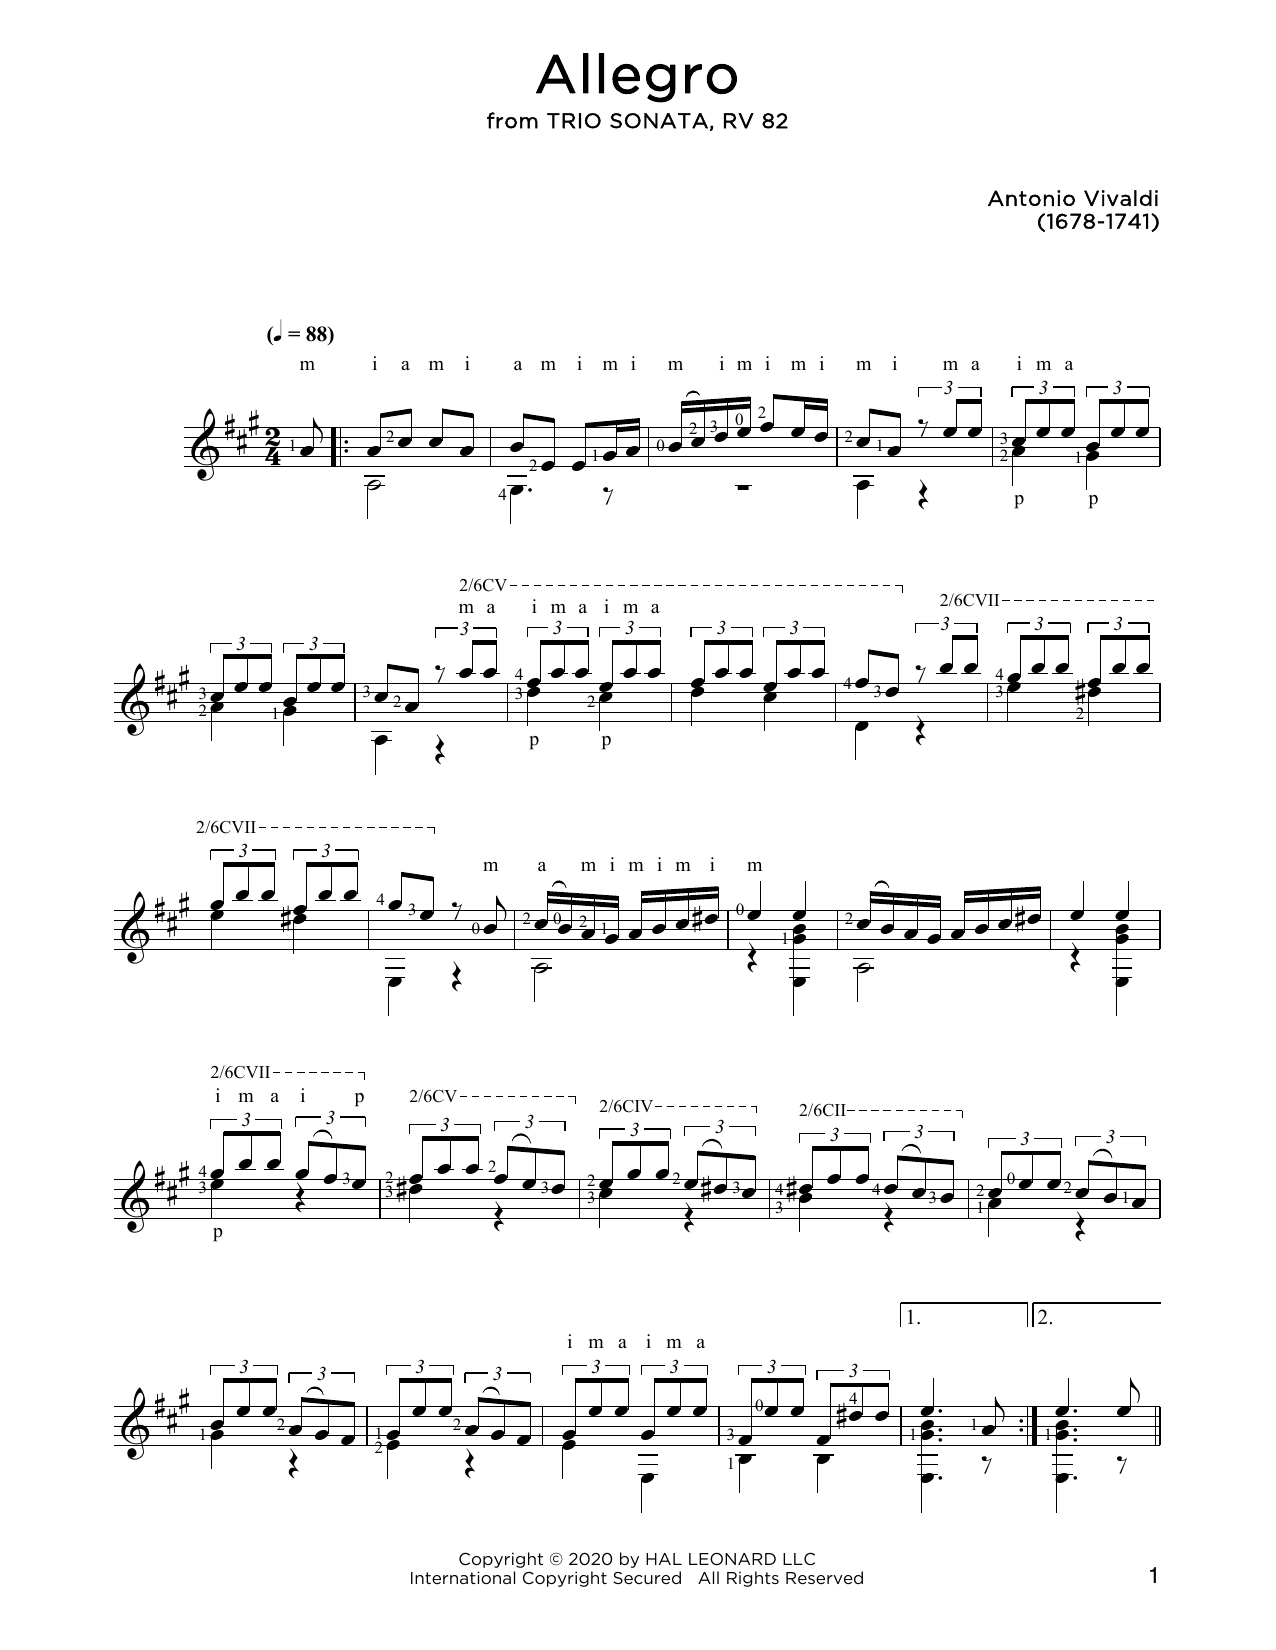 Download Antonio Vivaldi Allegro Sheet Music